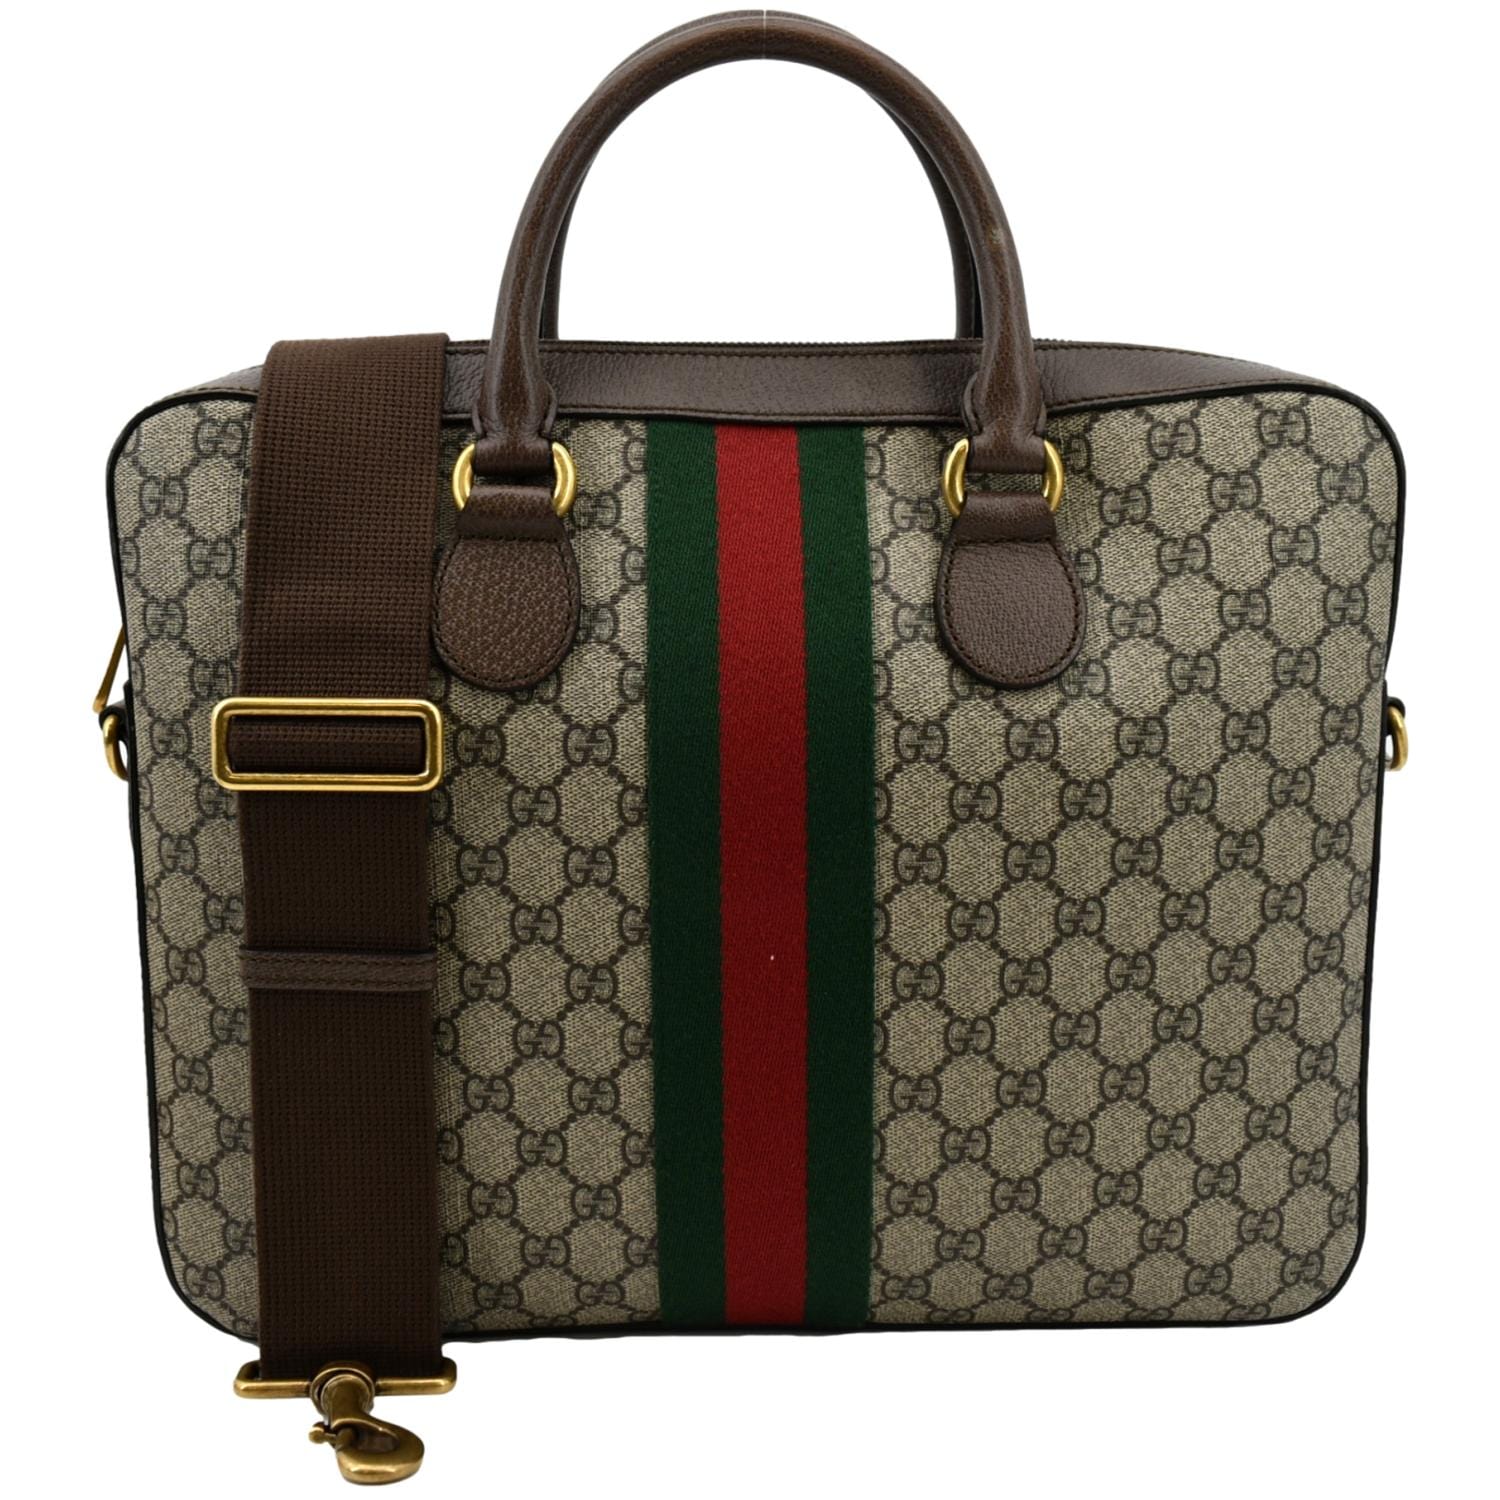 Gucci Beige GG Supreme Canvas and Leather Travel Tie Case Gucci